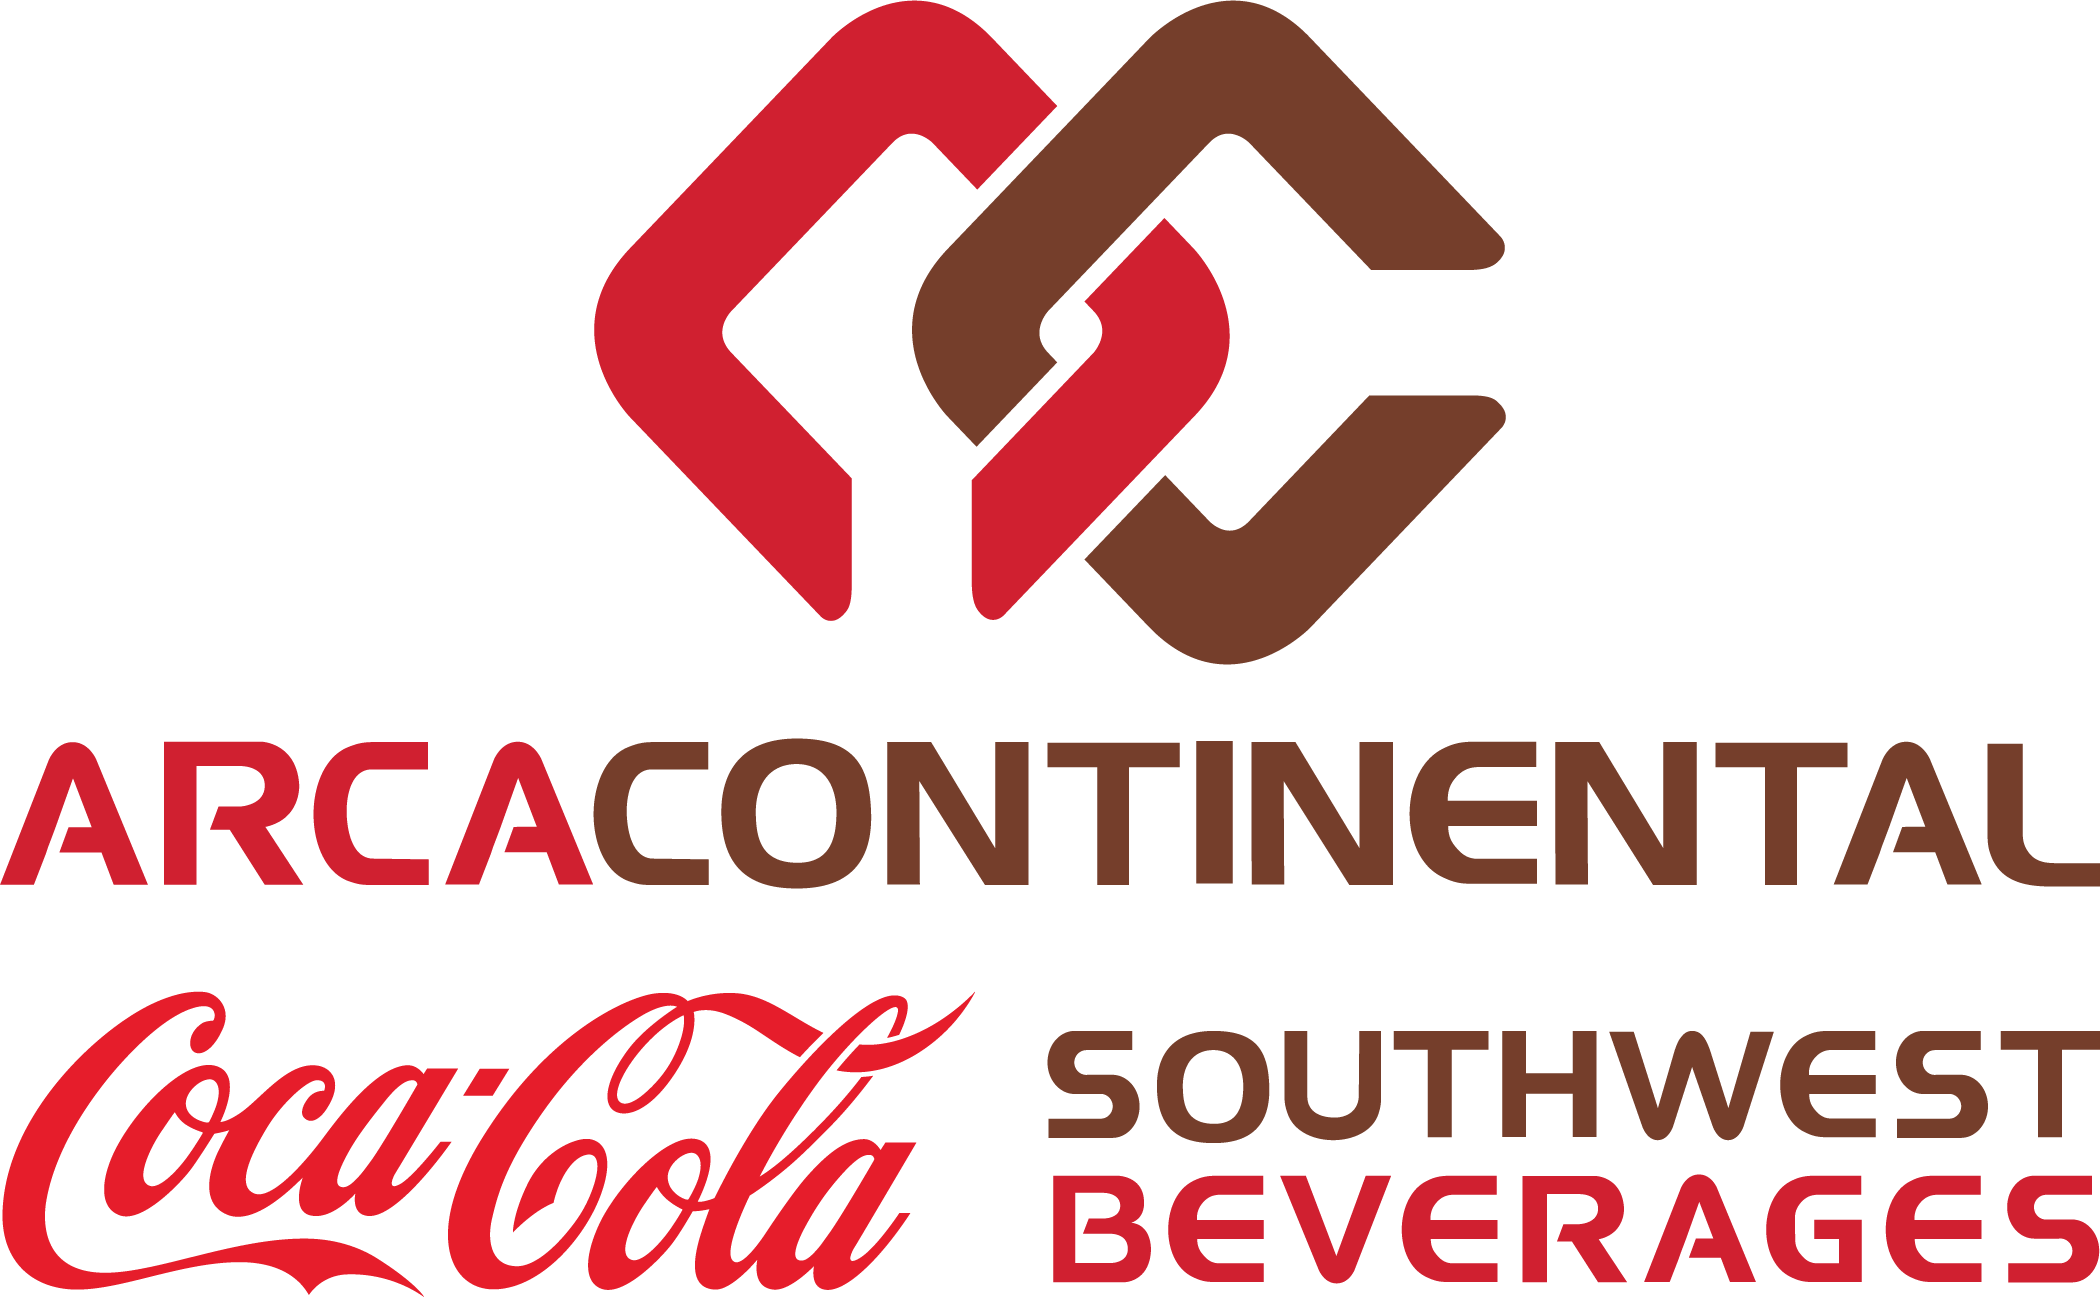 ARCA Continental Coca Cola Southwest Beverages